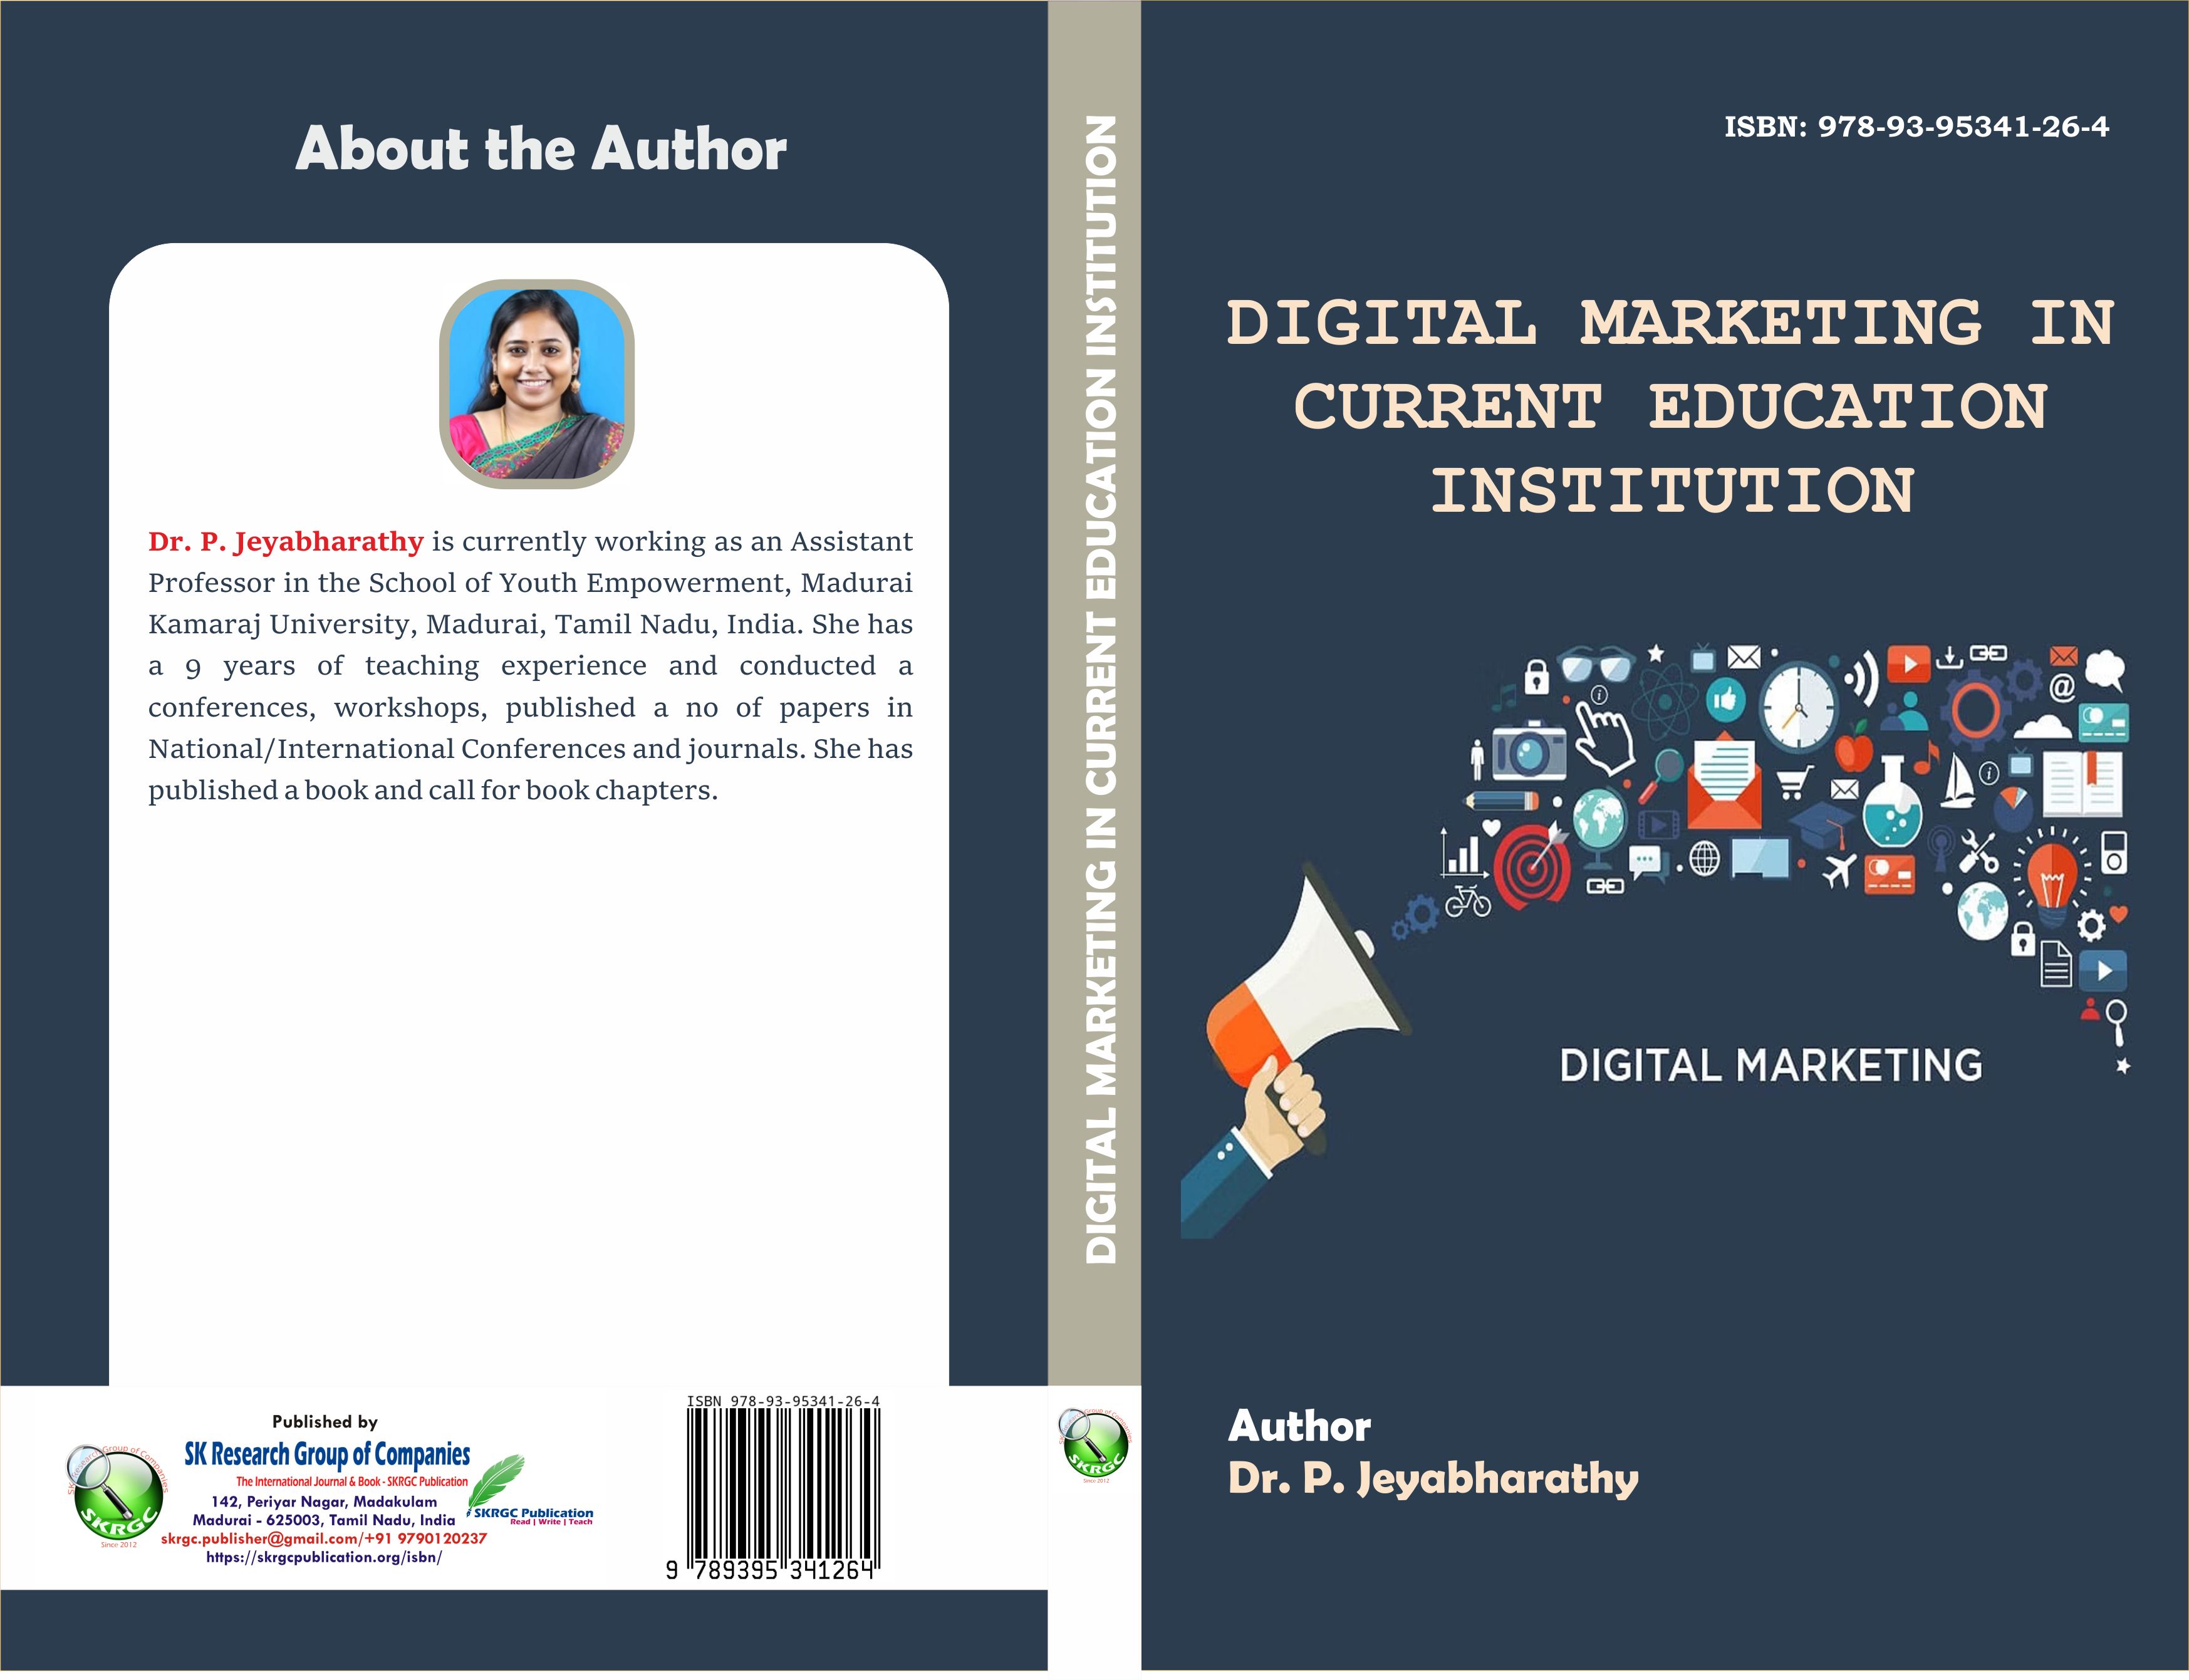 Digital Marketing in Current Education Institution